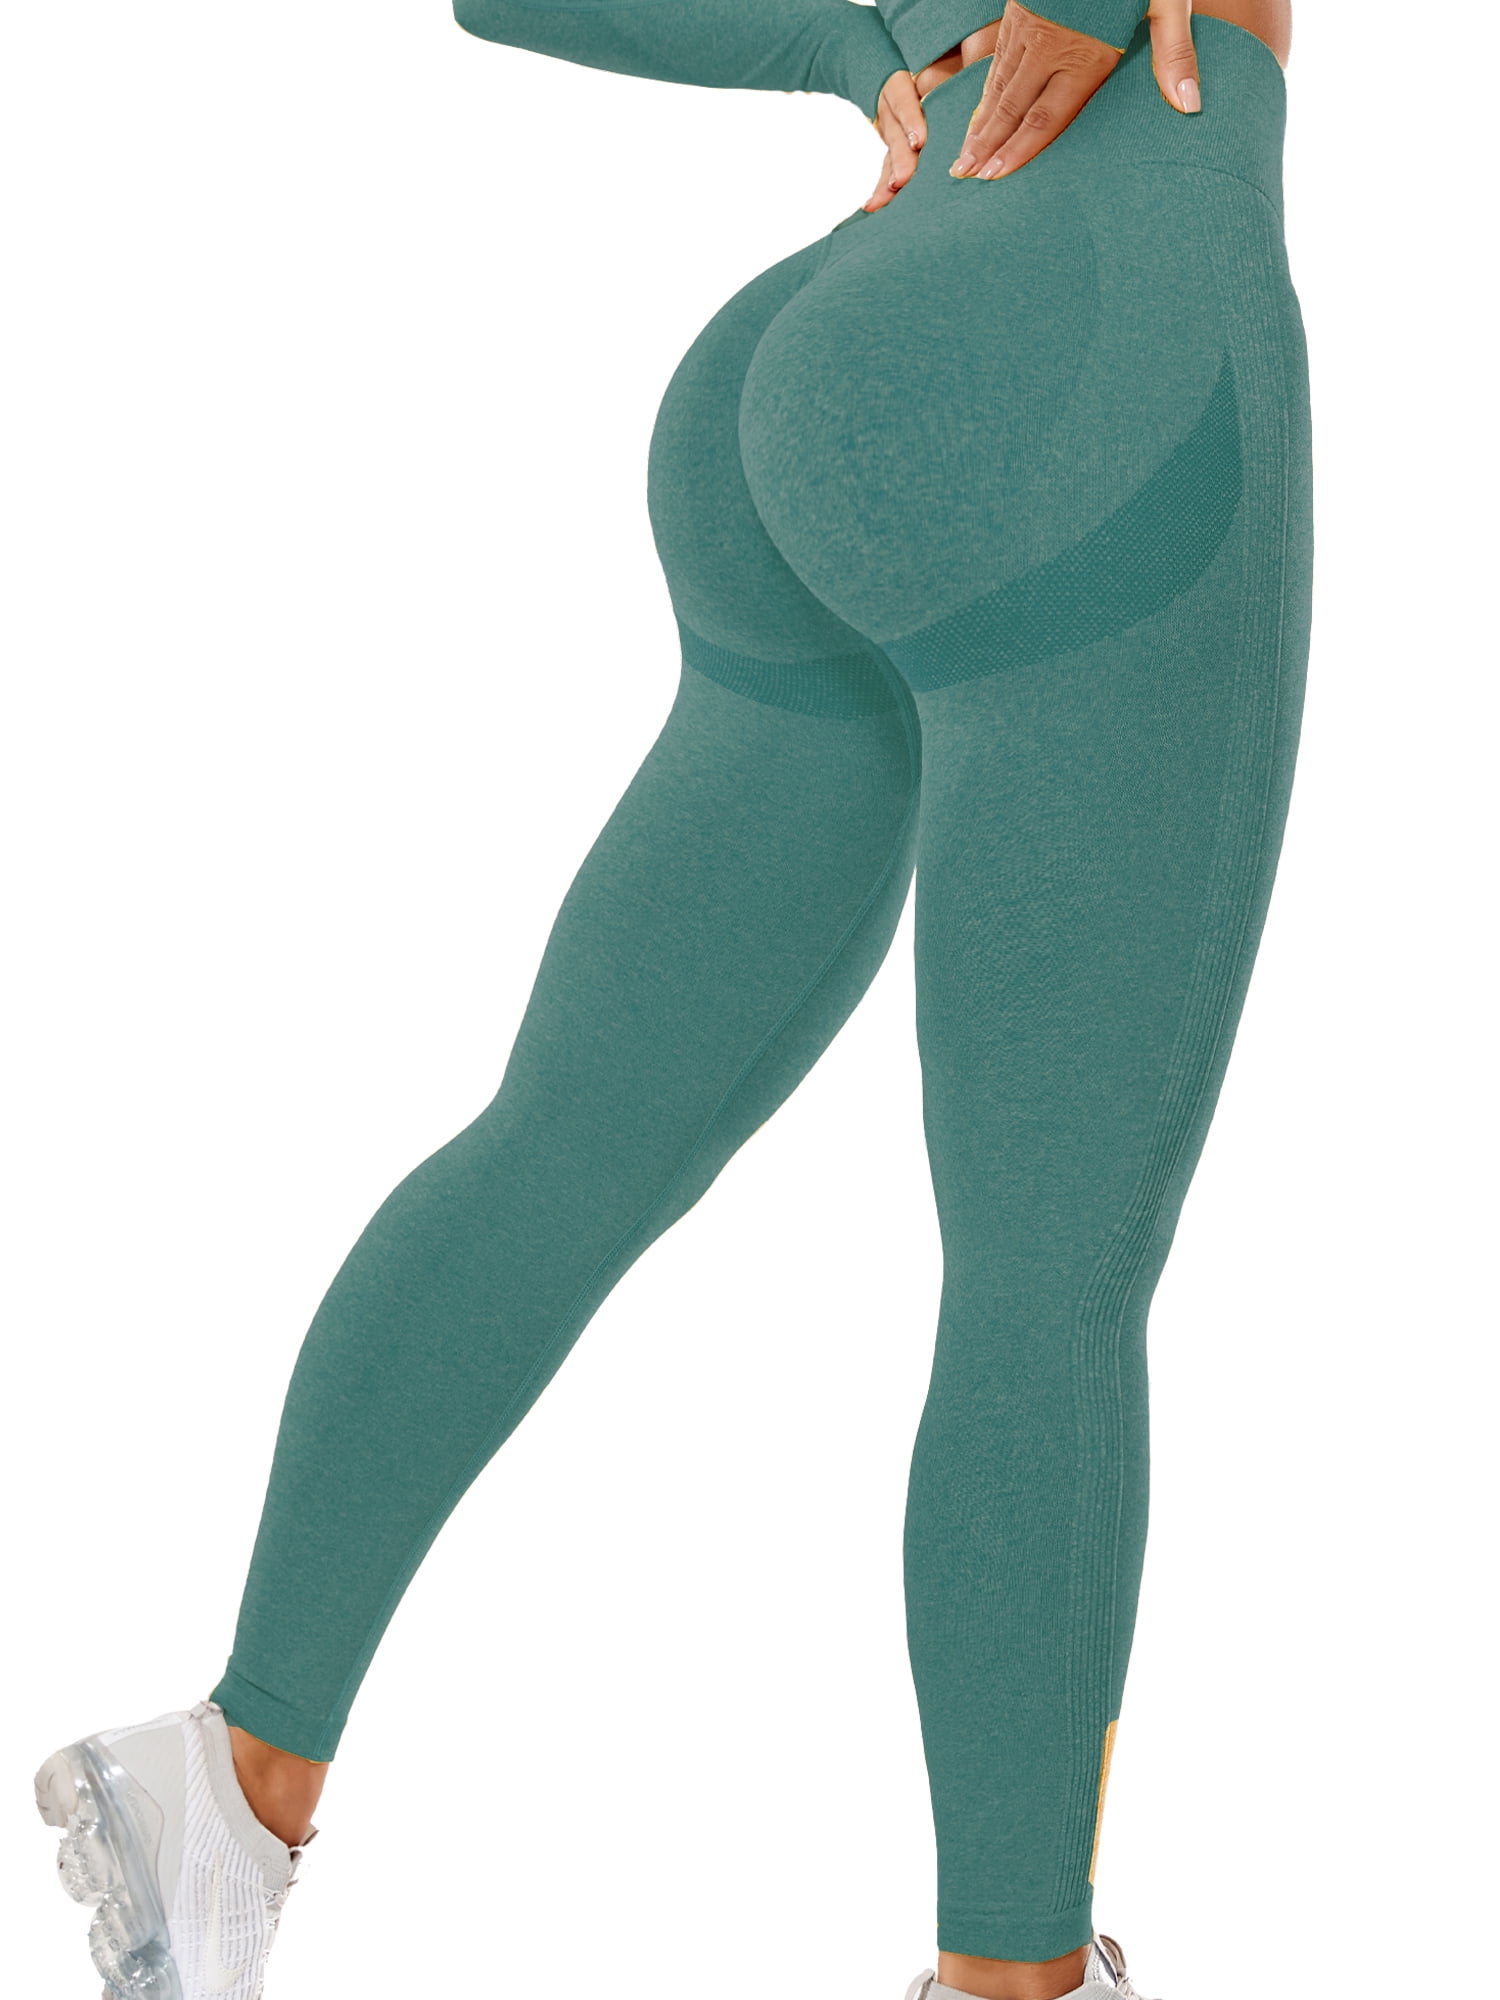 Zannycn Leggings Women's High Waist Sports Leggings with 3D